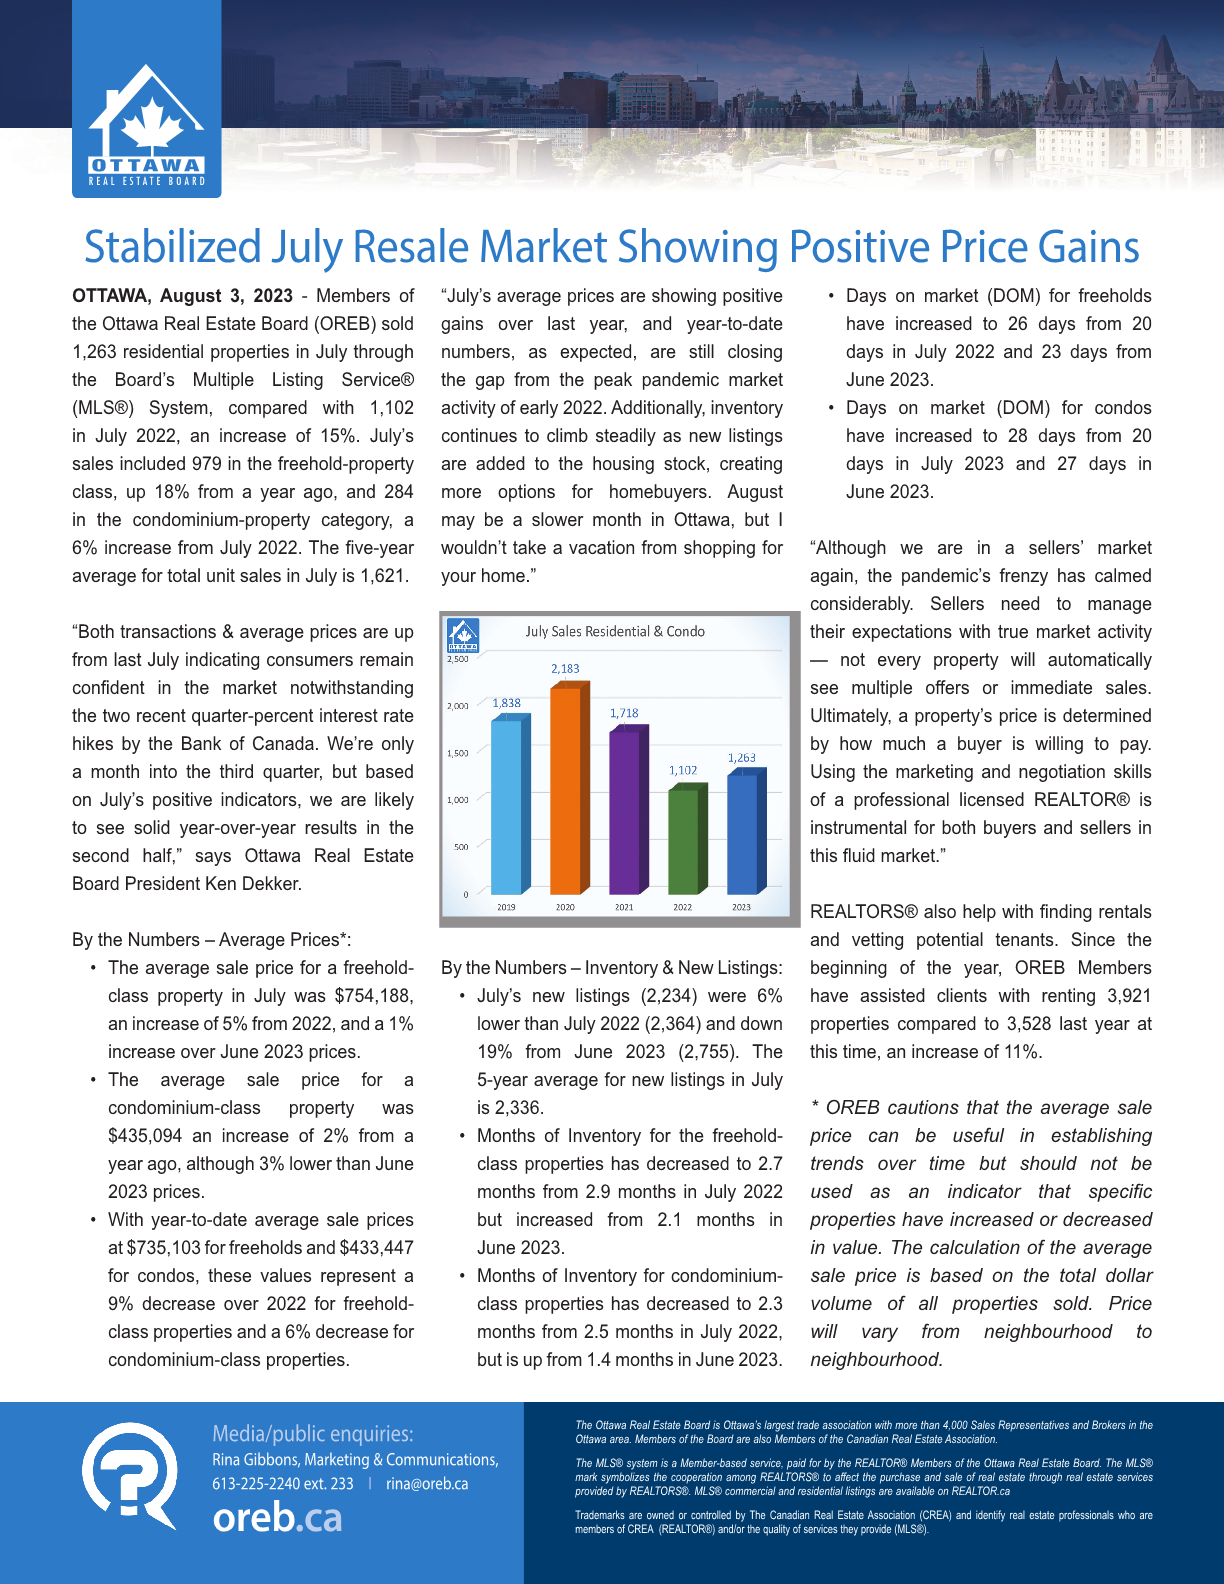 Stabilized July Resale Market Showing Positive Gains (OREB)